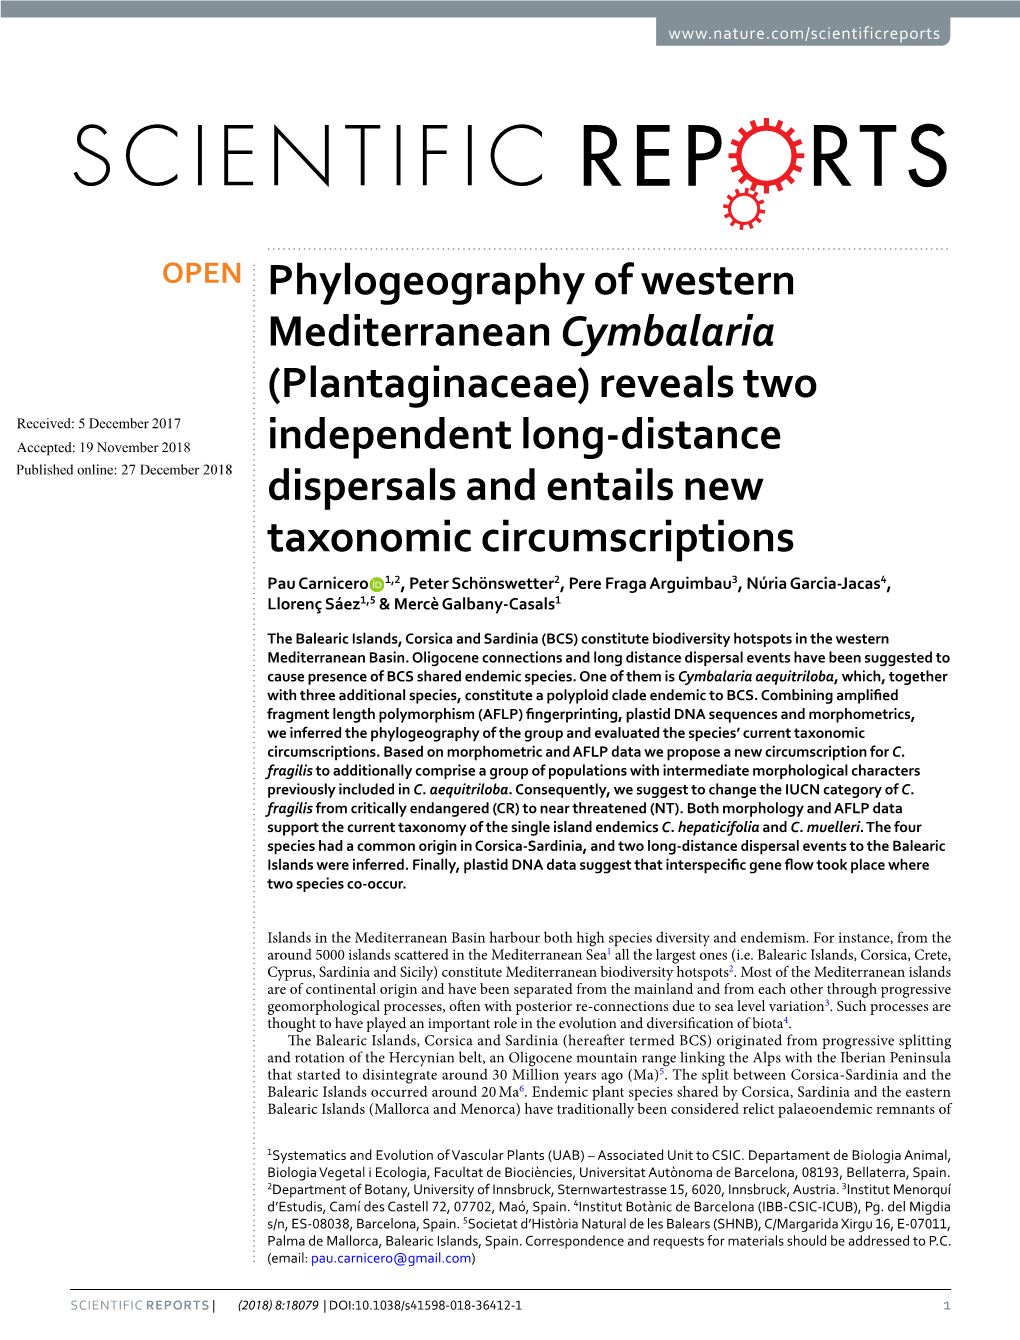 Phylogeography of Western Mediterranean Cymbalaria